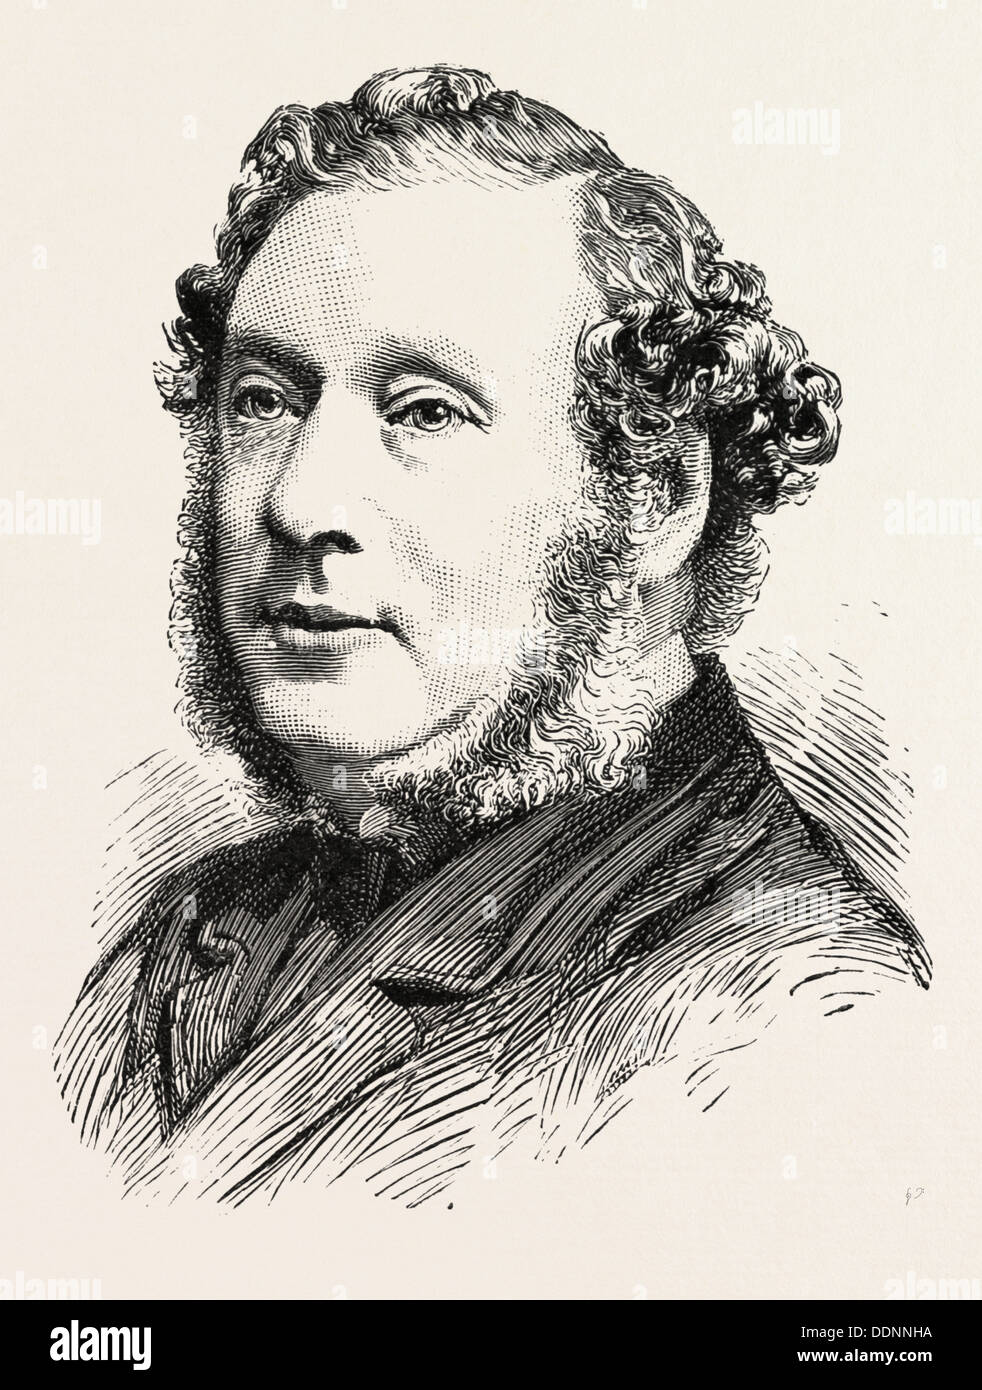 MR. T. GERMAN REED 1817 - 1888, 1888 engraving Stock Photo